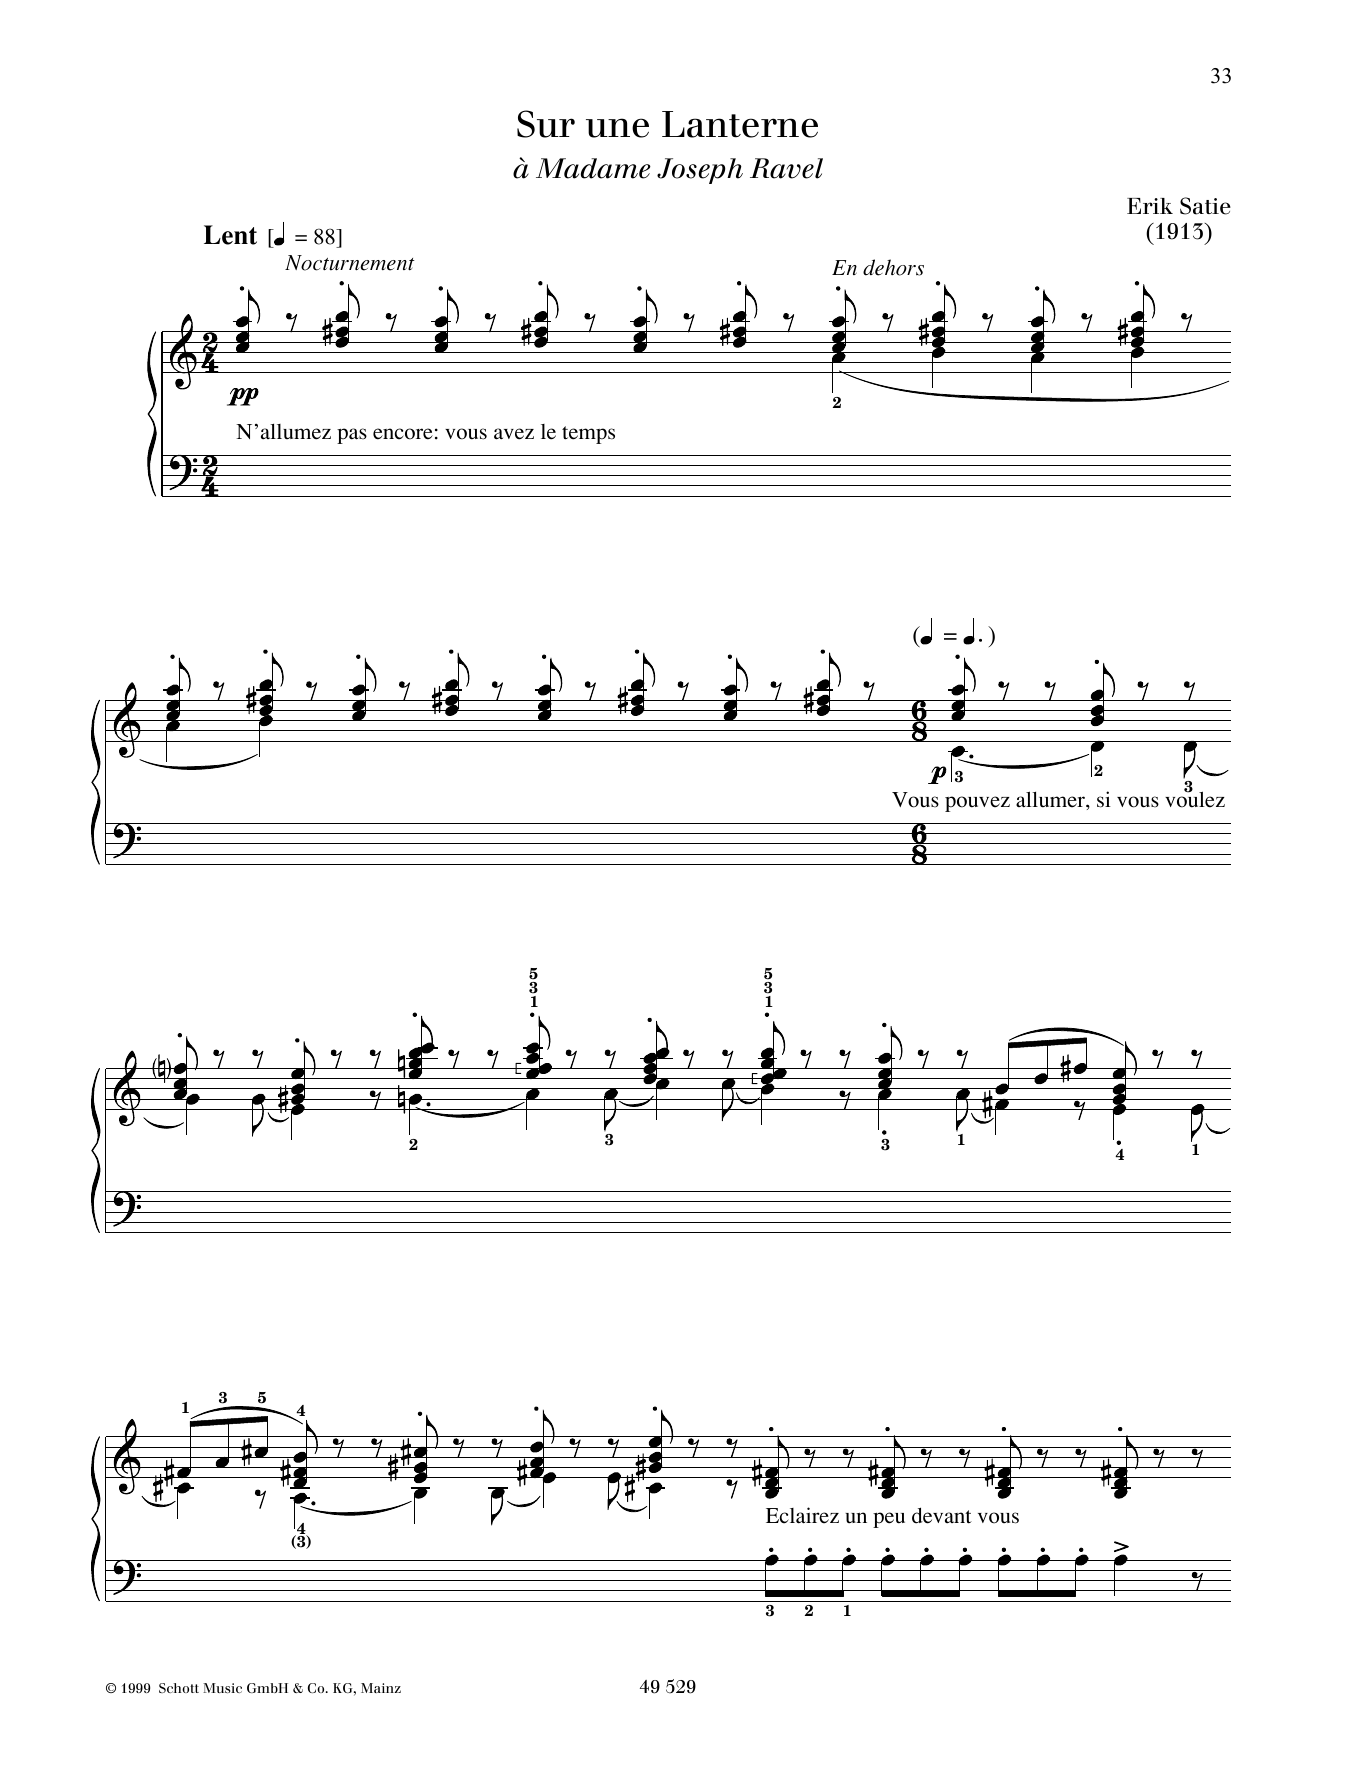 Erik Satie Sur une Lanterne sheet music notes and chords arranged for Piano Solo